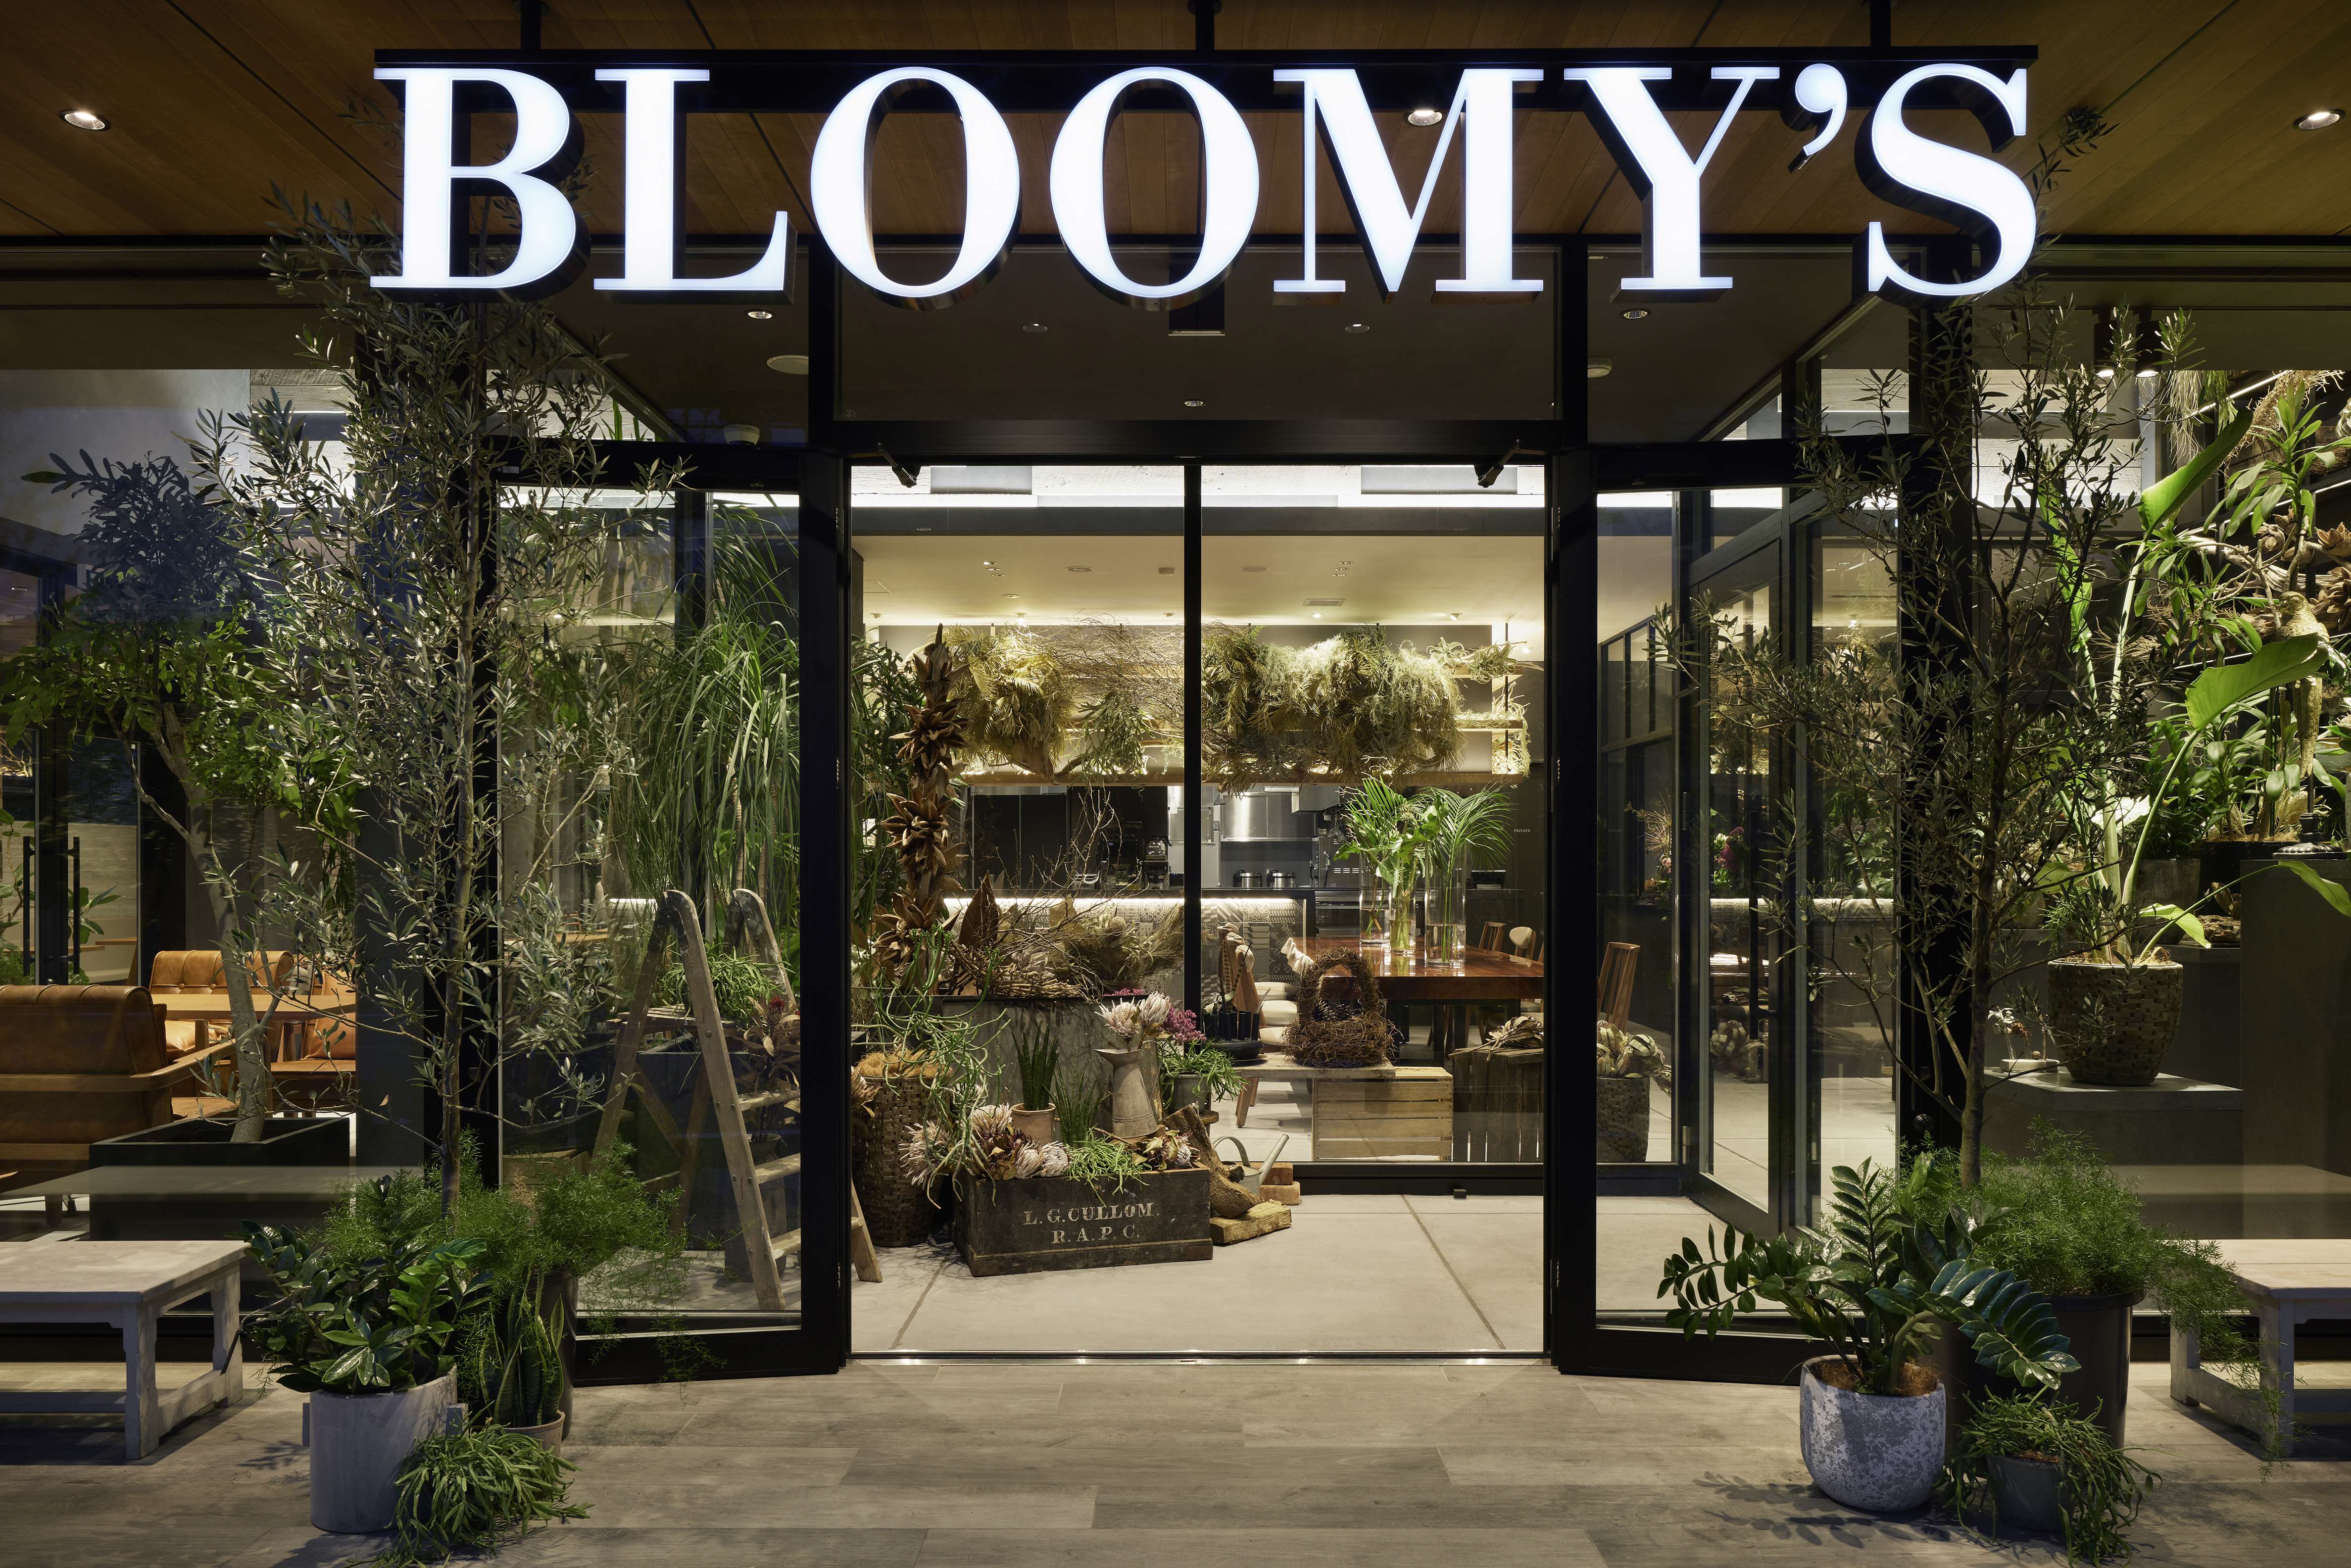 Flower Cafe BLOOMY'S